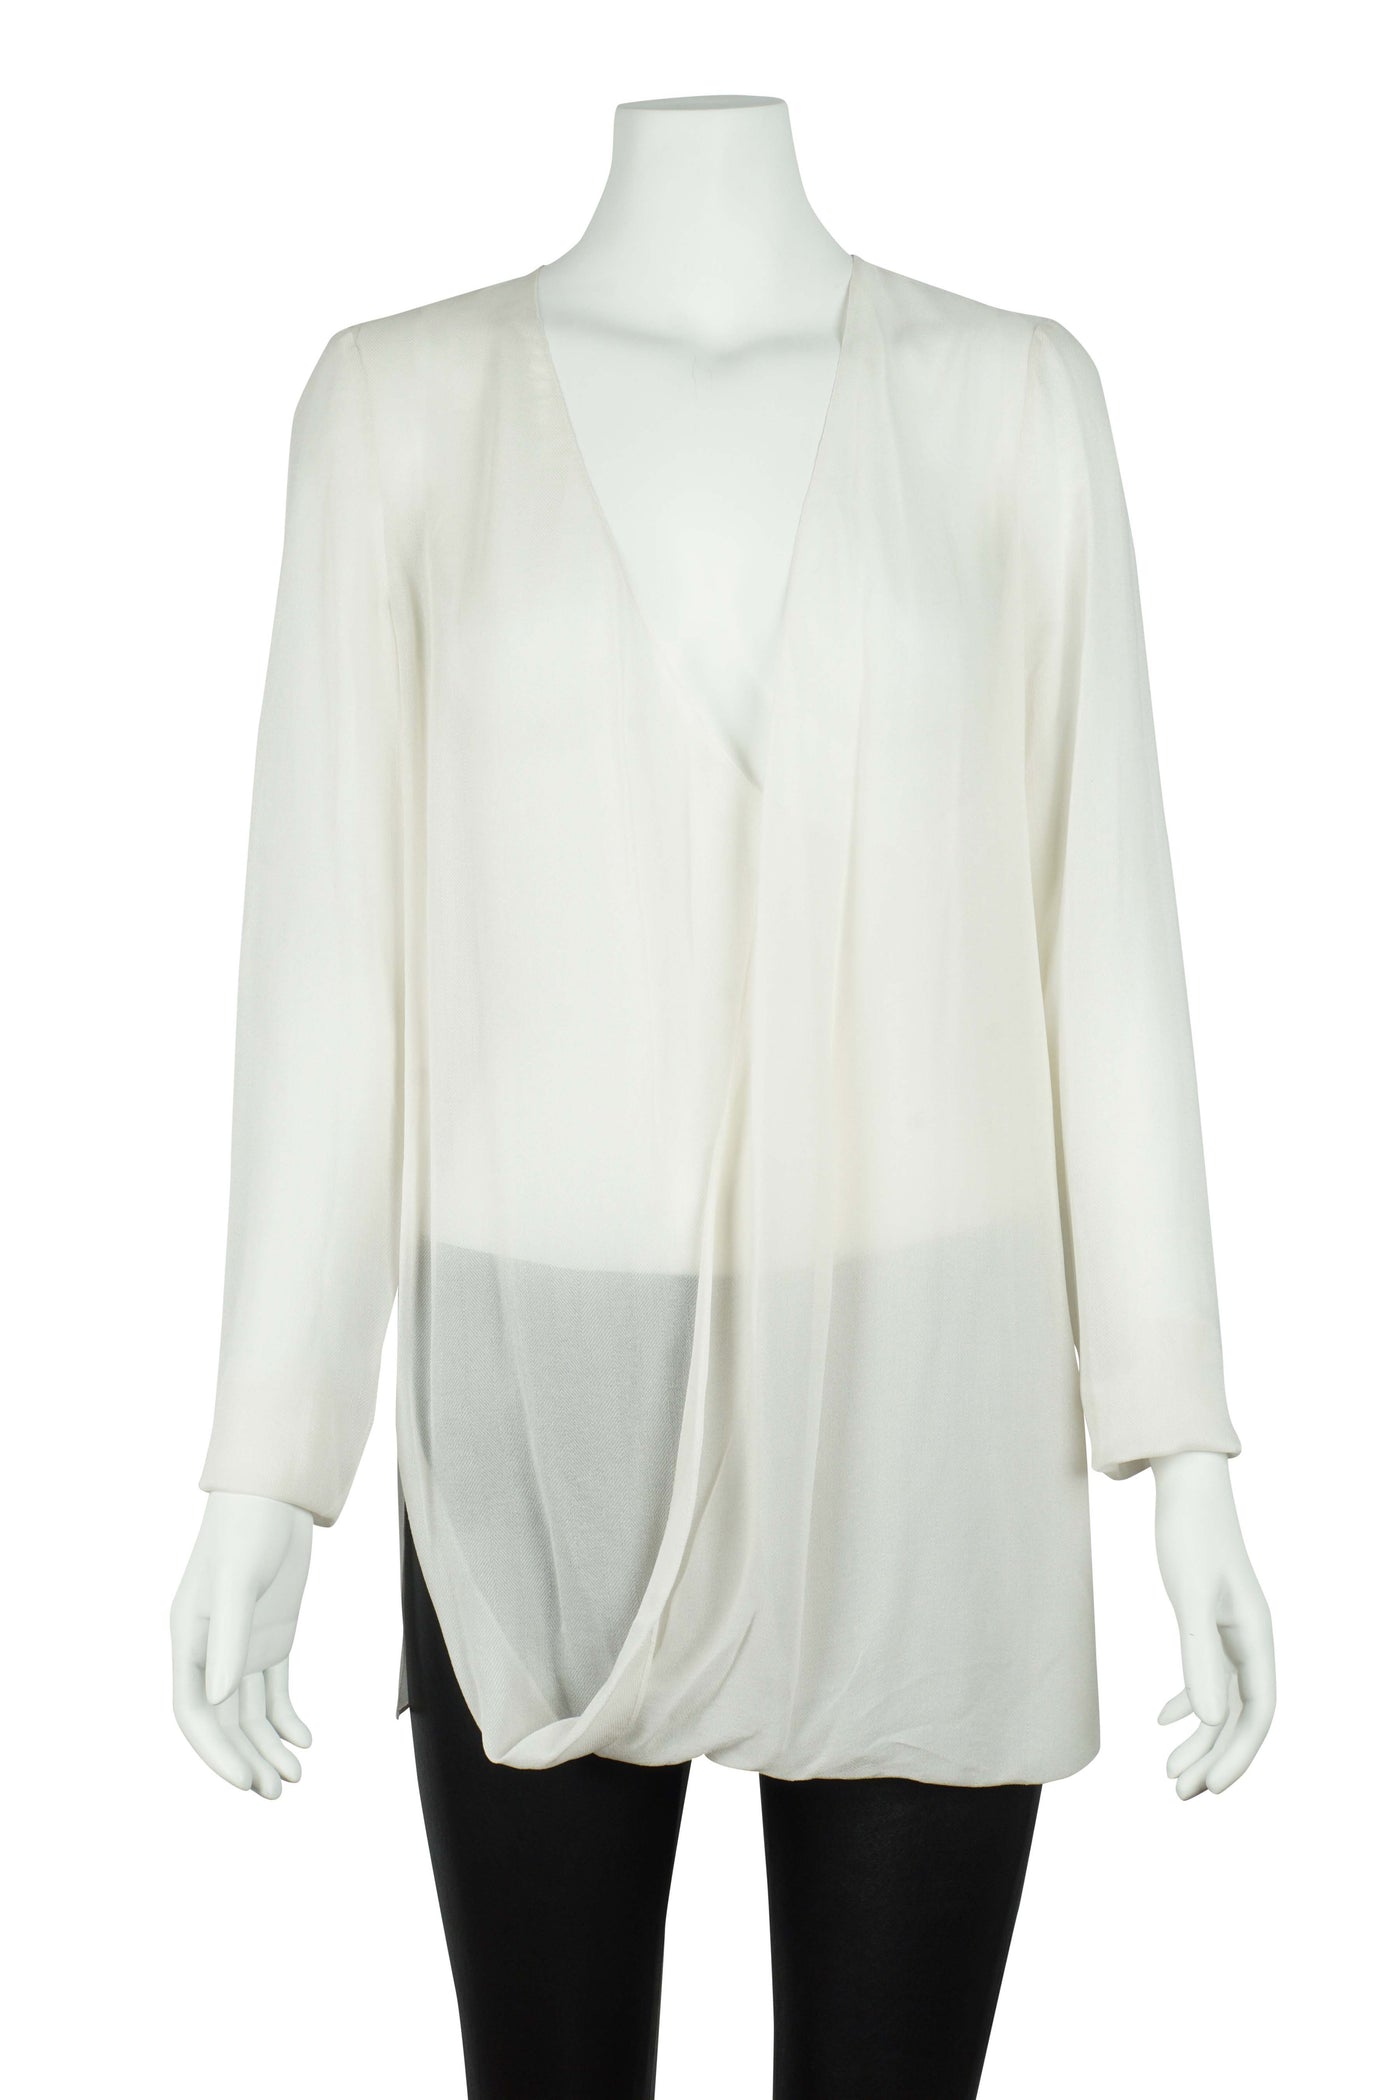 Cream silk cross over blouse